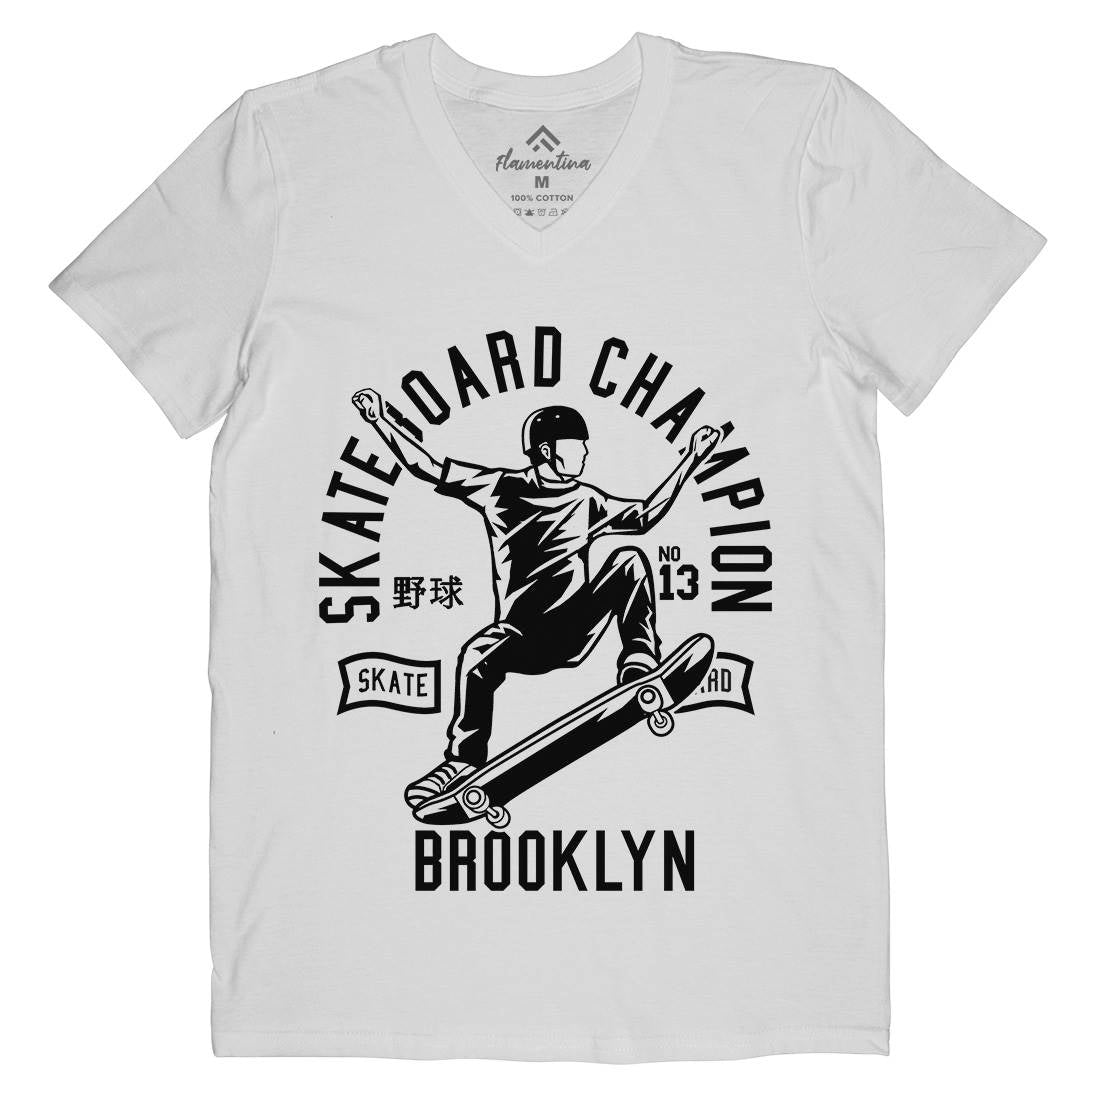 Skateboard Champion Mens V-Neck T-Shirt Skate B622